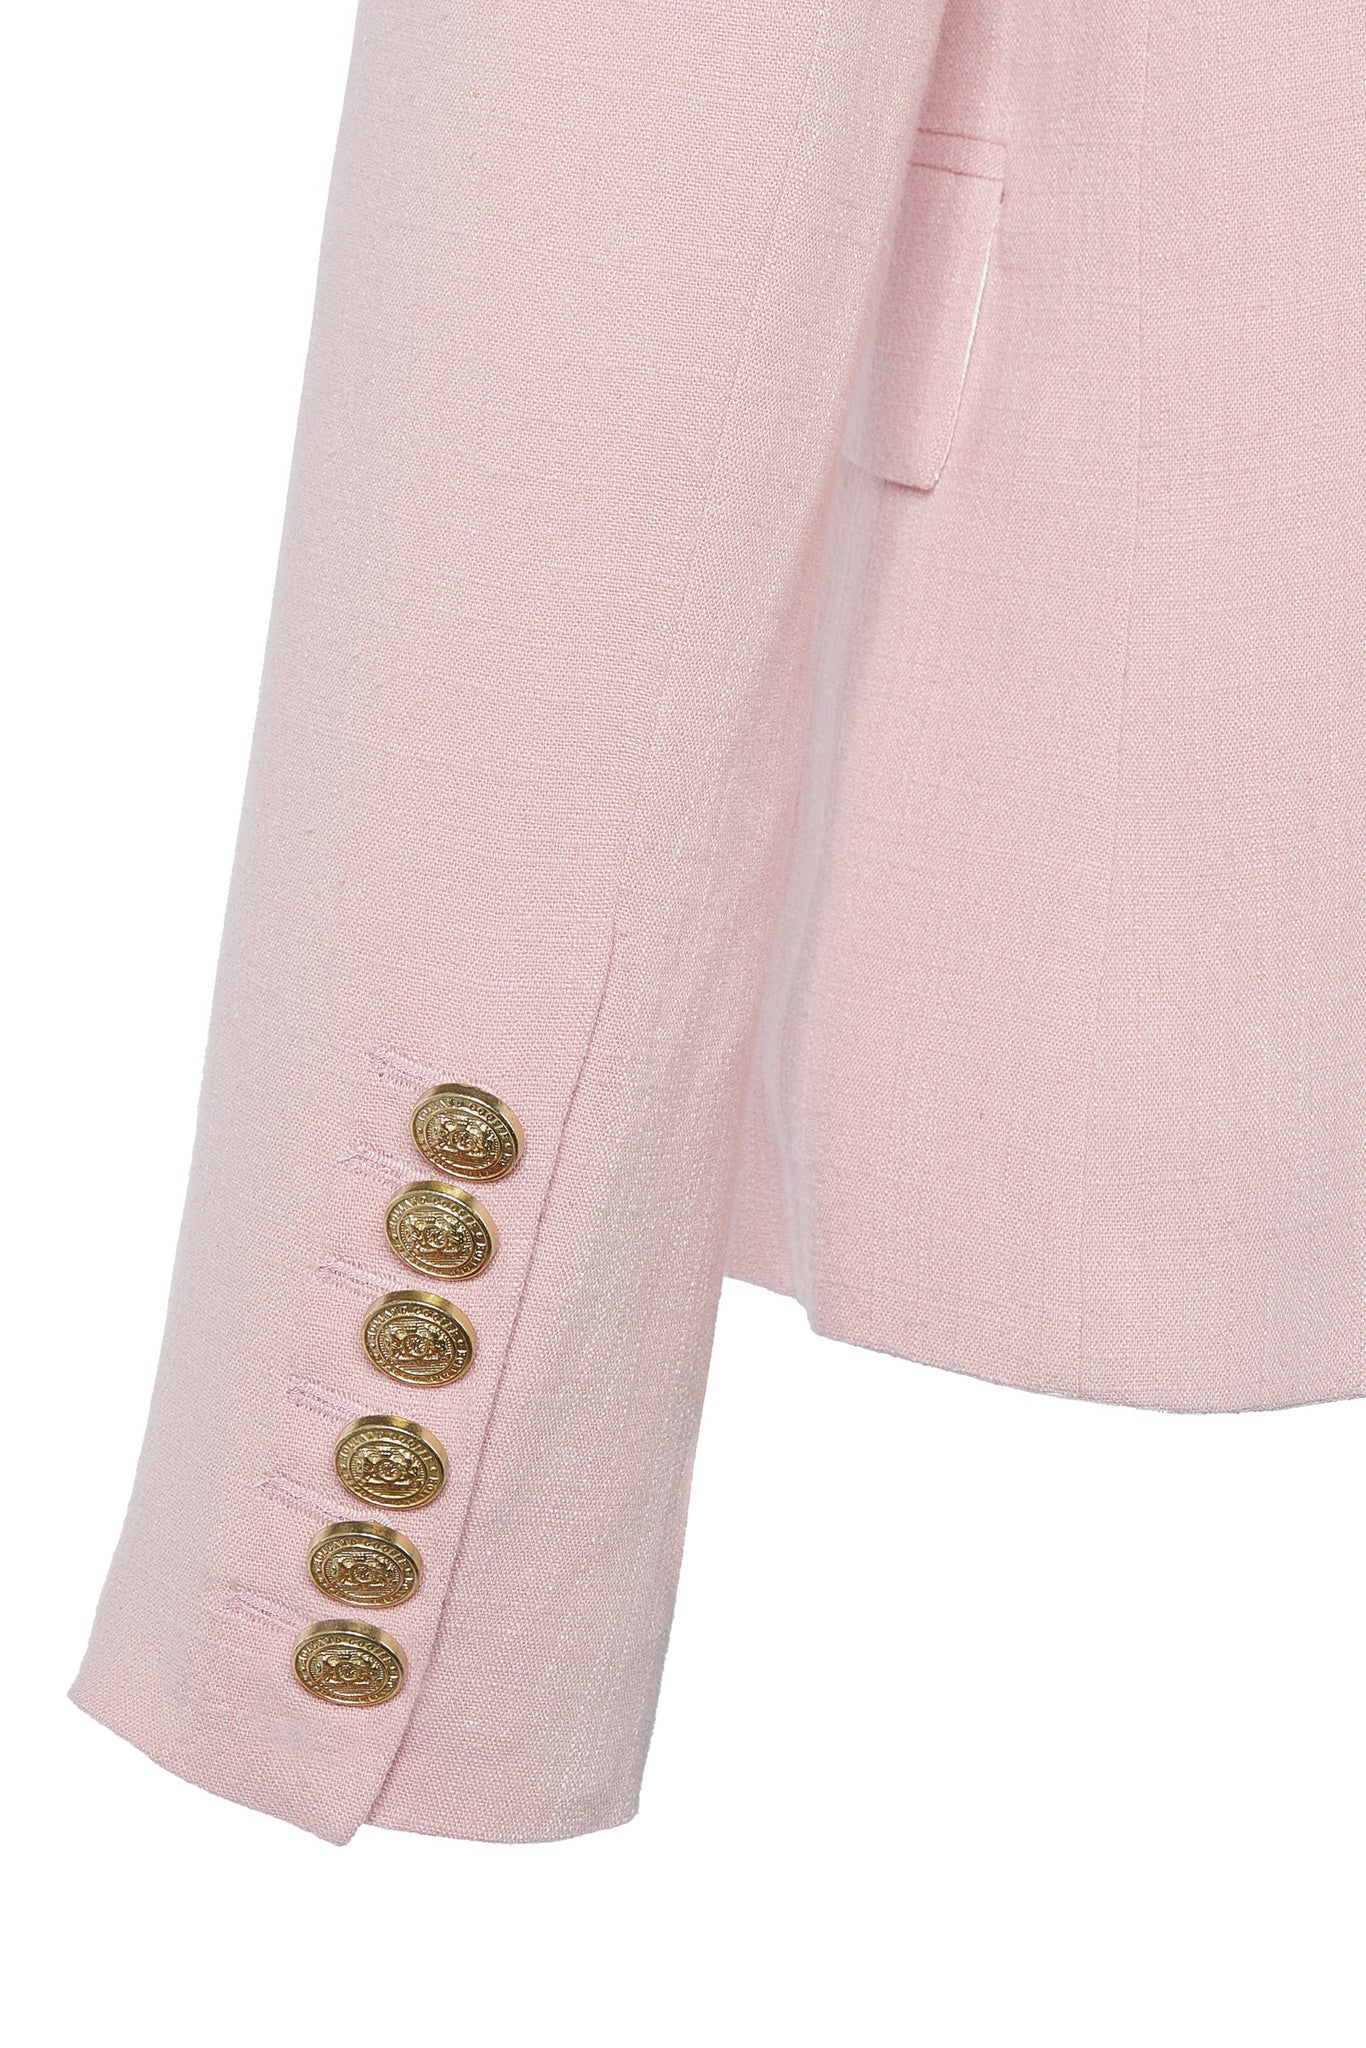 Knightsbridge Blazer (Pink Linen)